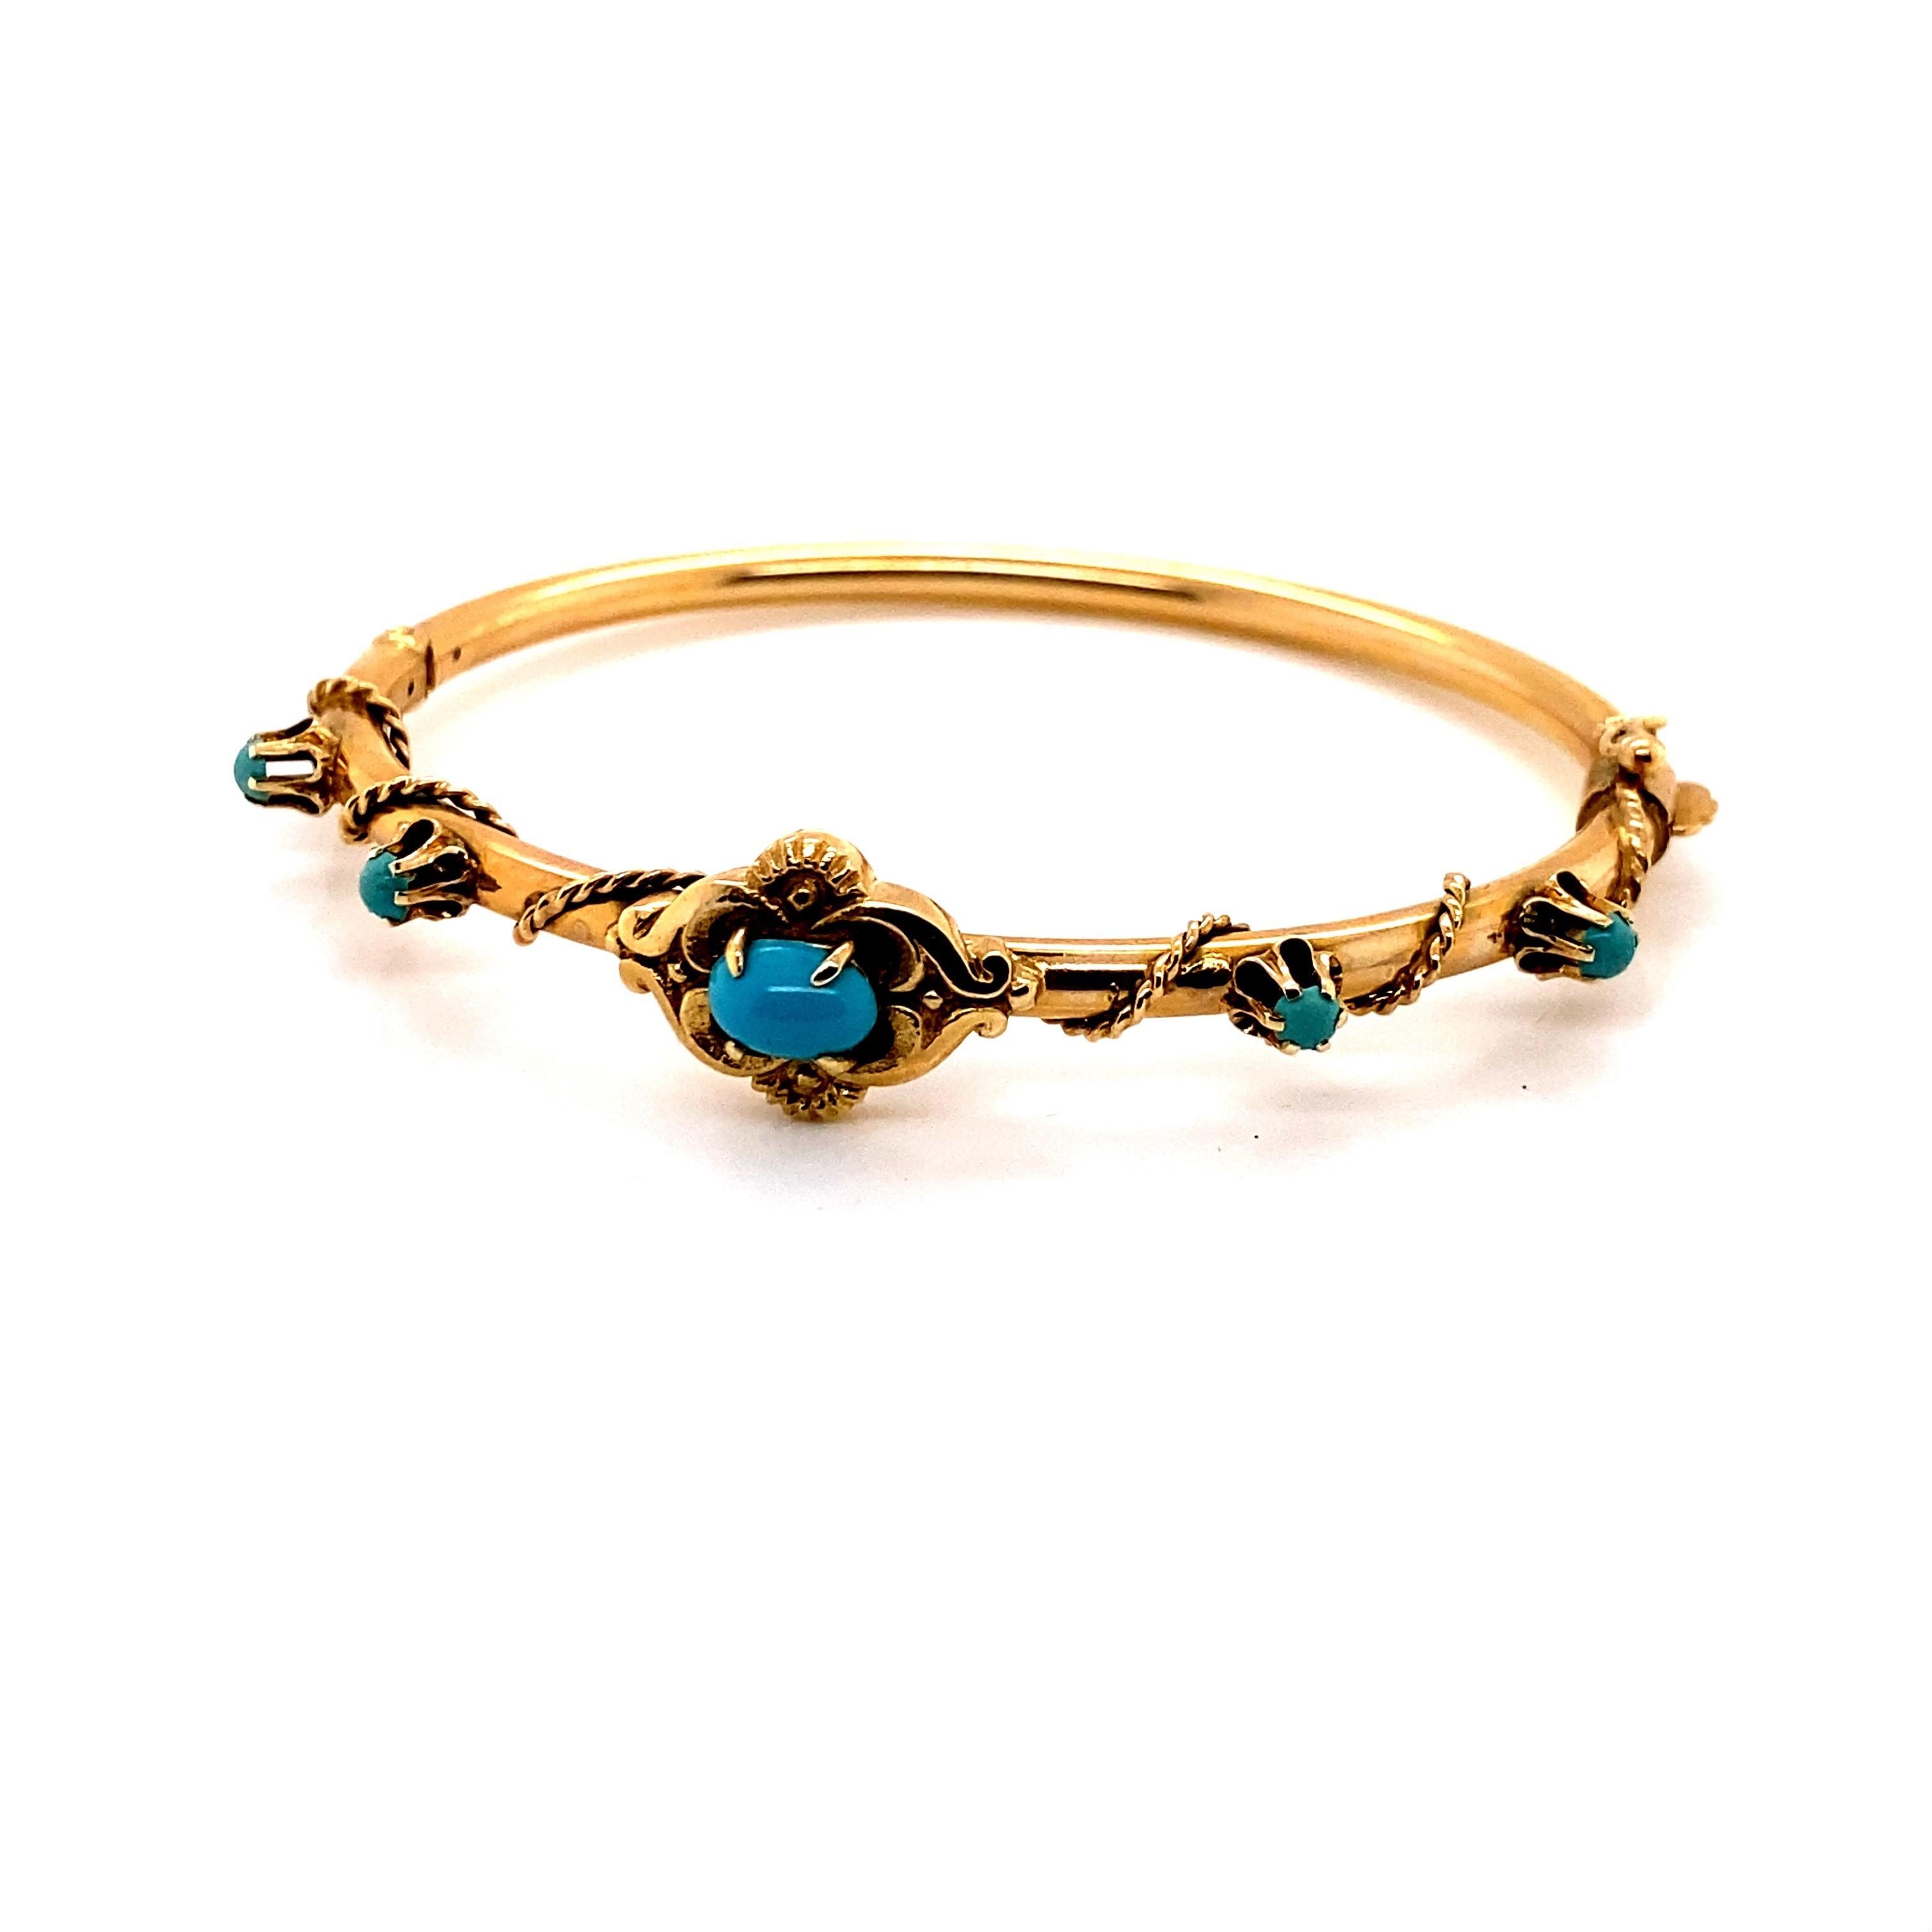 14k gold and turquoise bracelet